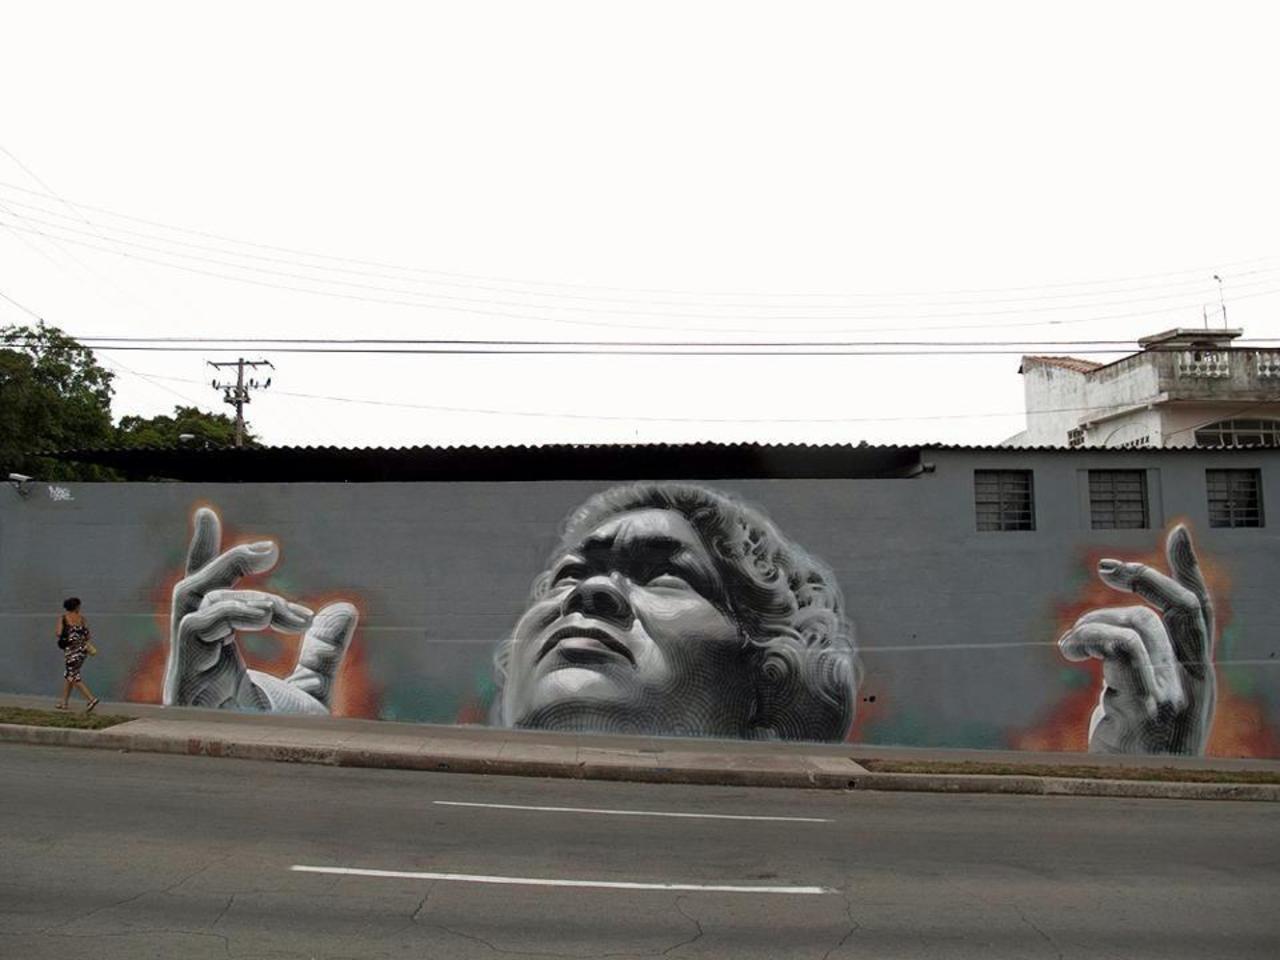 Artist 'El Mac' new Street Art mural located in Havana, Cuba #art #mural #graffiti #streetart http://t.co/TcfFd6BtYt